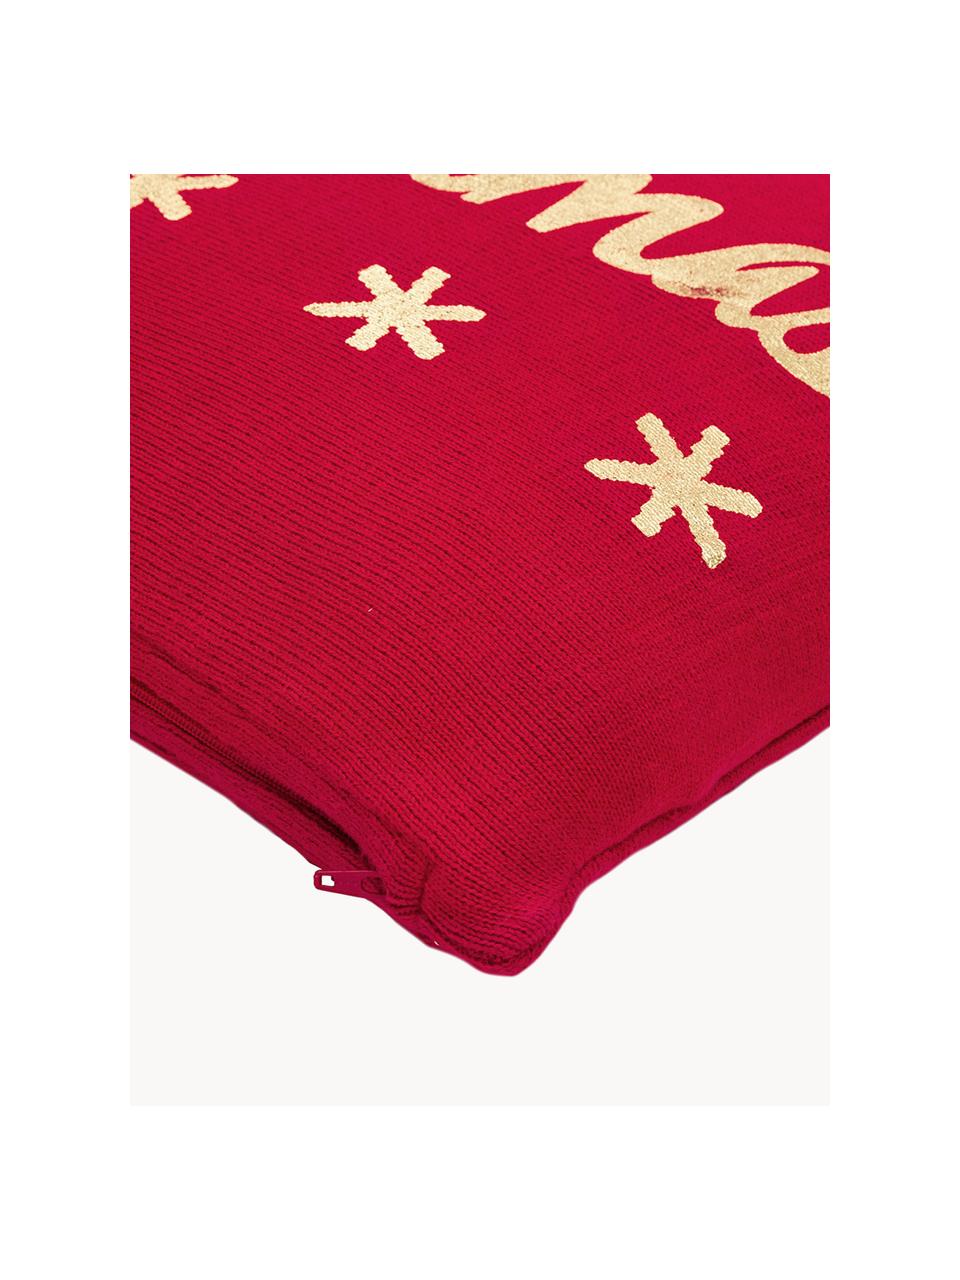 Strick-Kissenhülle Christmas mit Schriftzug, 100 % Baumwolle, Rot, Goldfarben, B 40 x L 40 cm